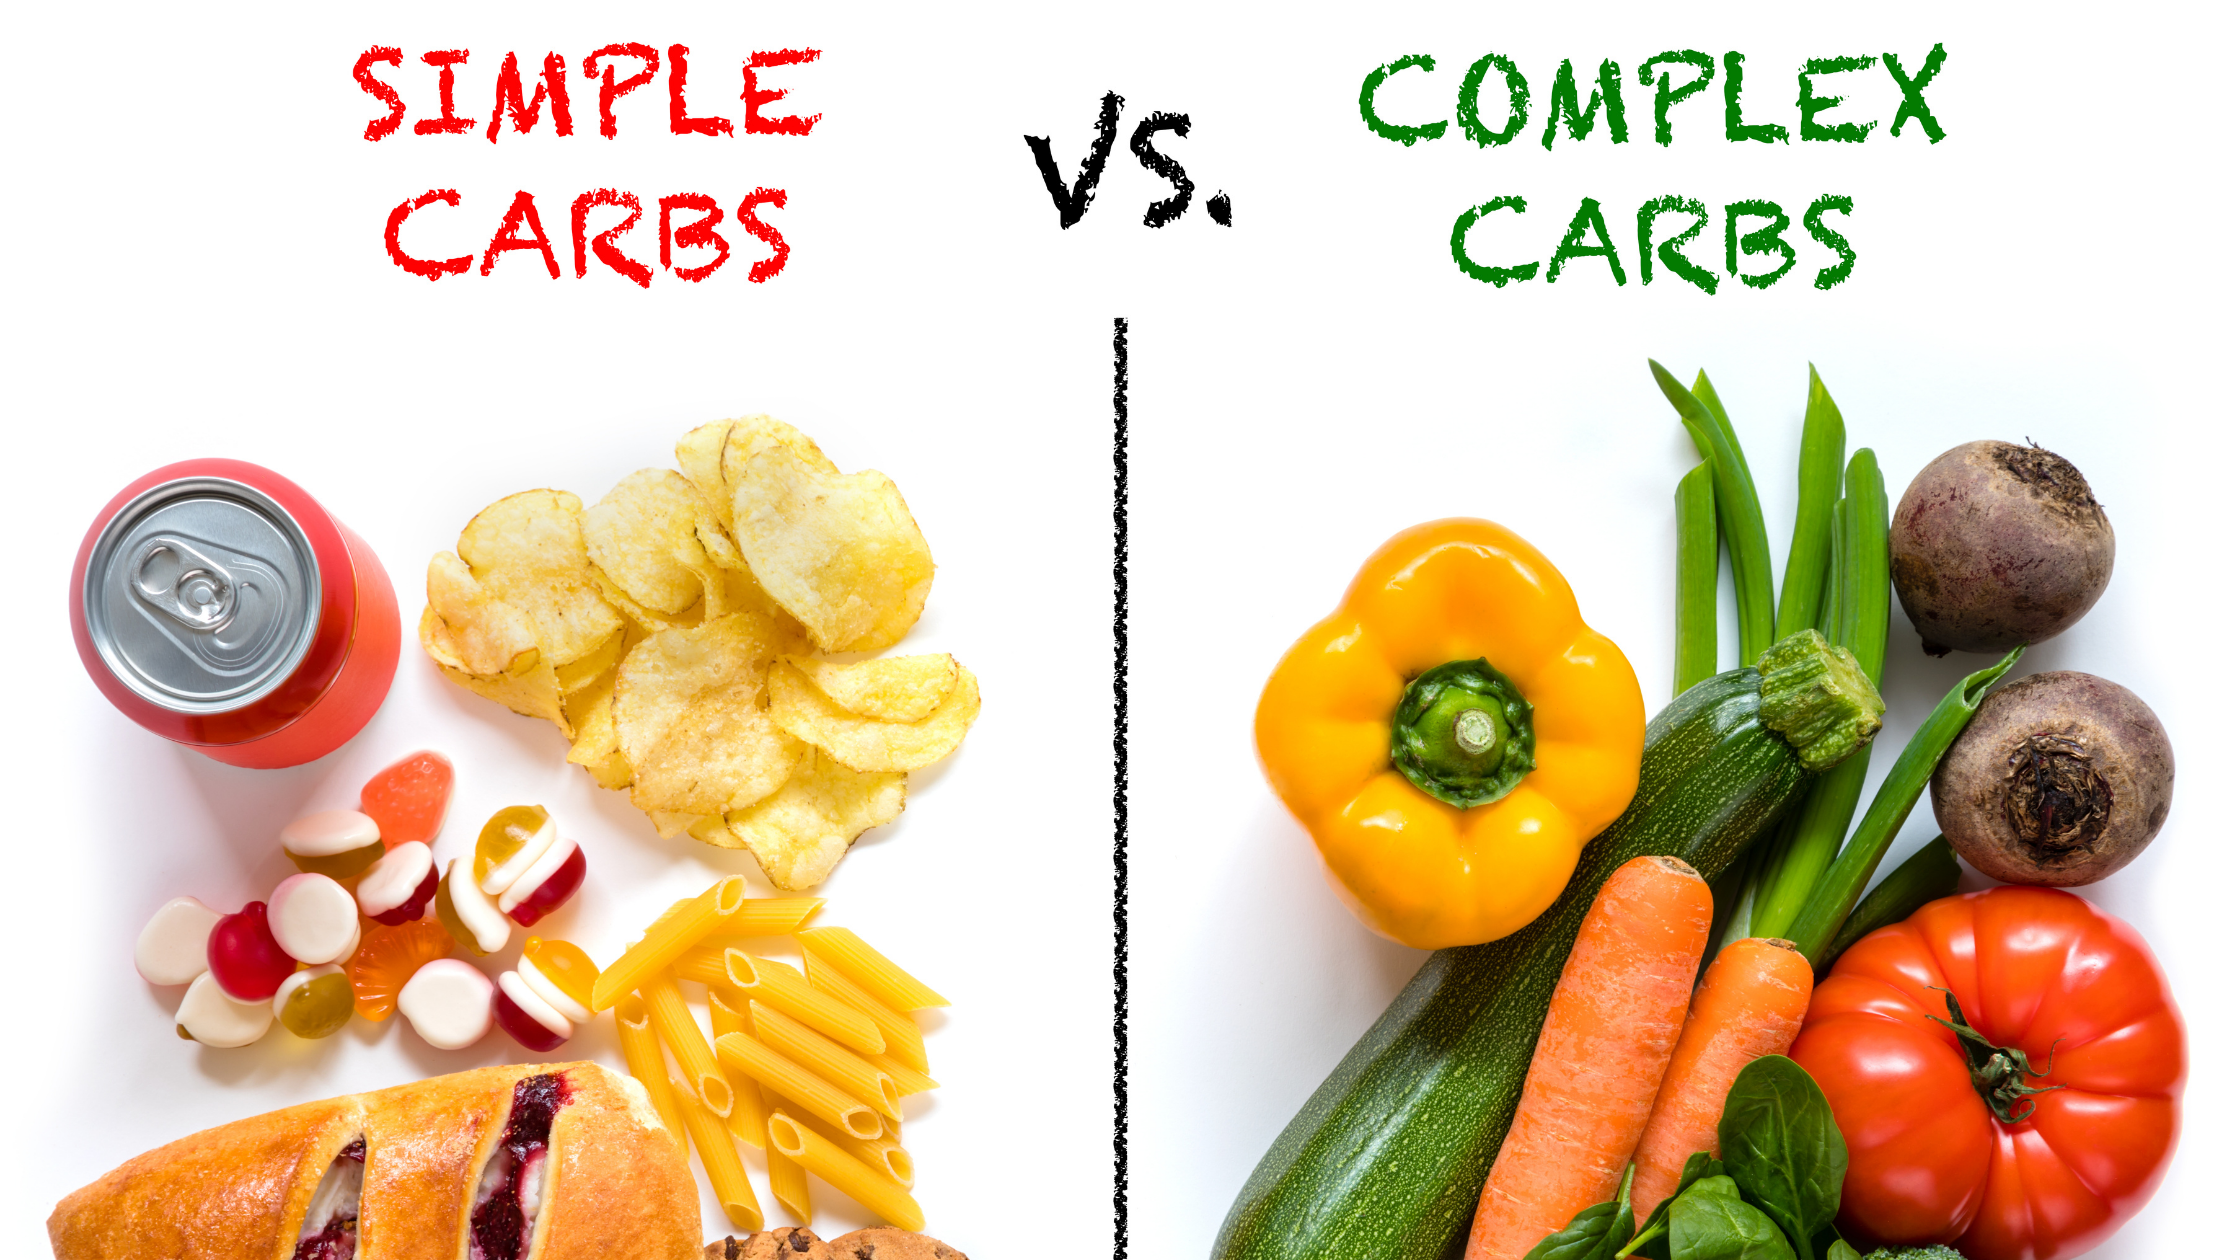 Simple Carbs vs. Complex Carbs | Simple Carbs - Junk Food, Soda, chips | Complex Carbs - Vegetables, carrots, peppers, mushrooms